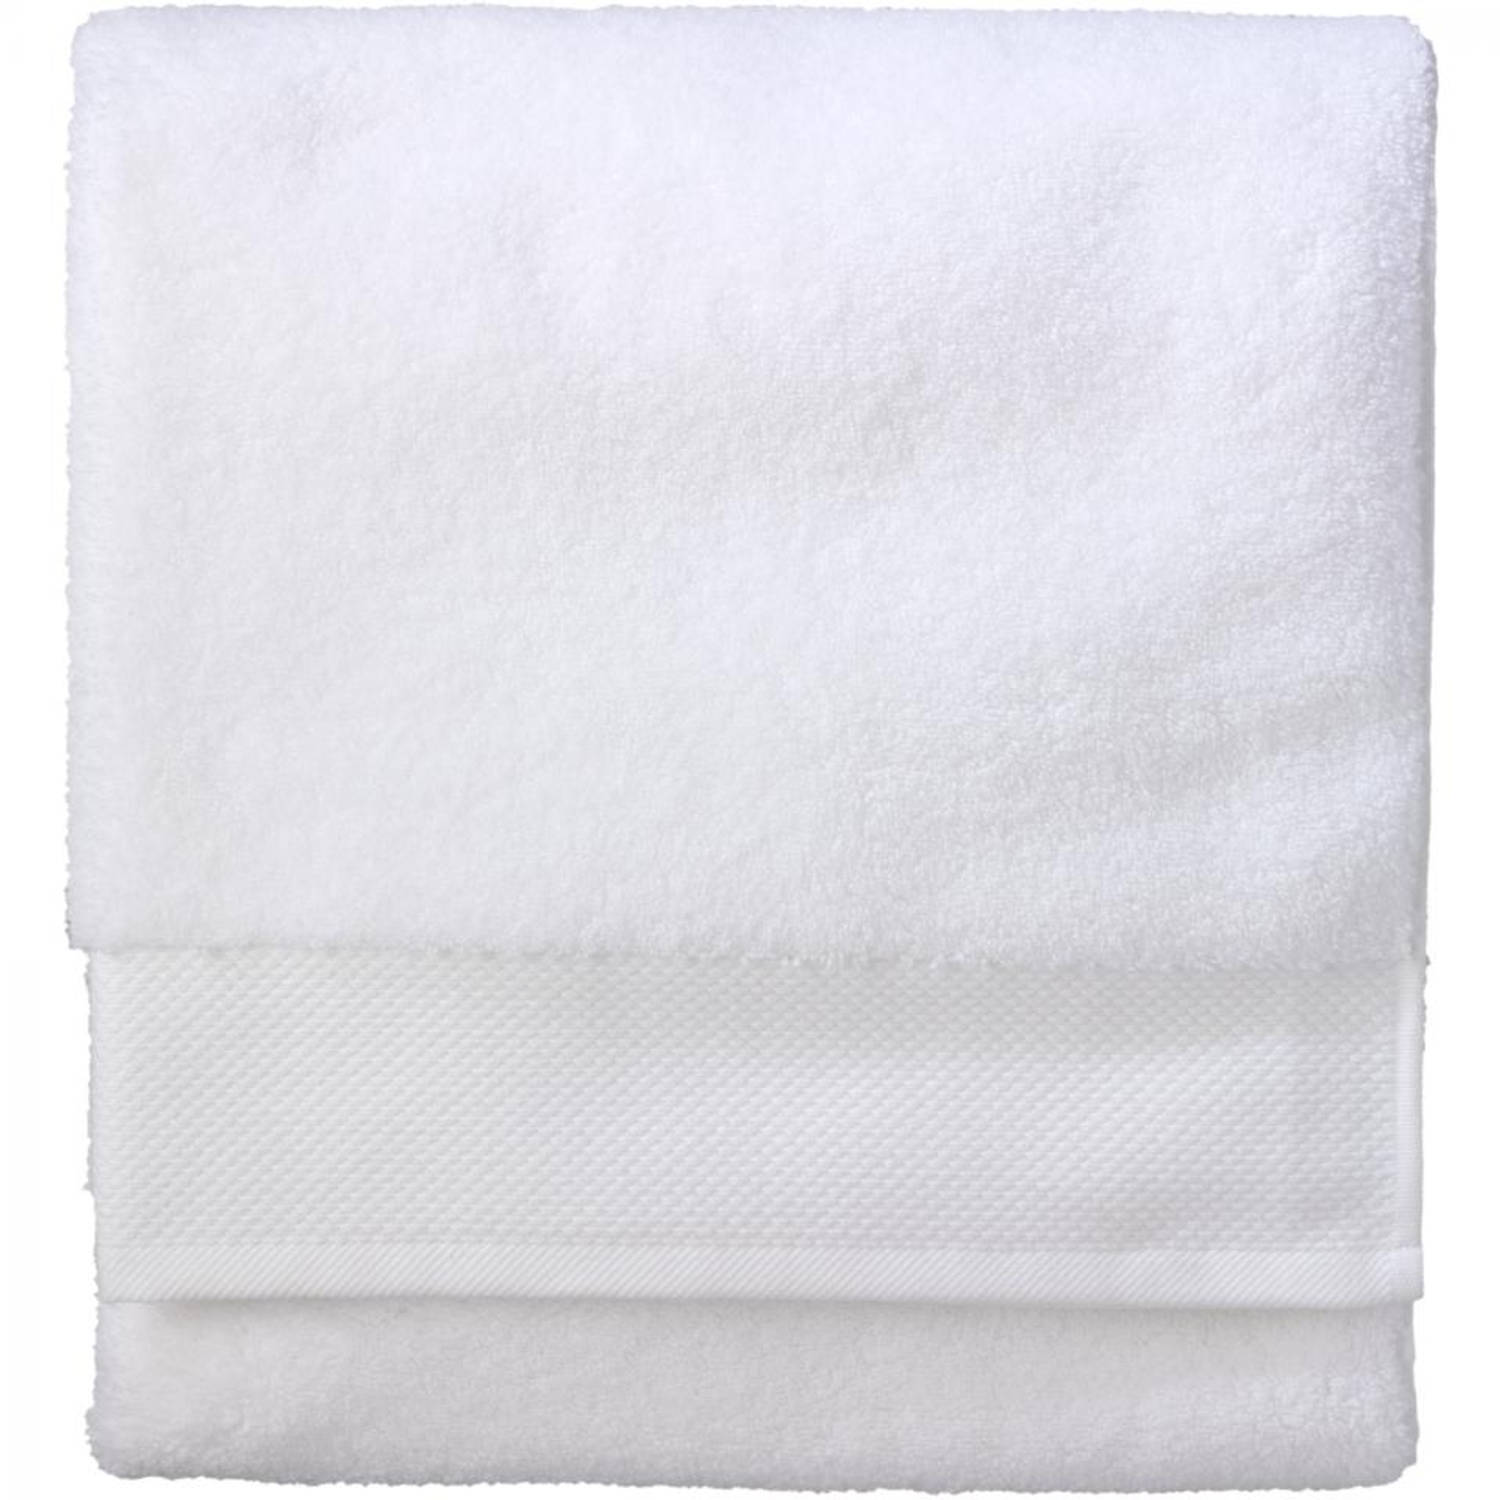 Blokker handdoek zacht - wit - x 70 cm |